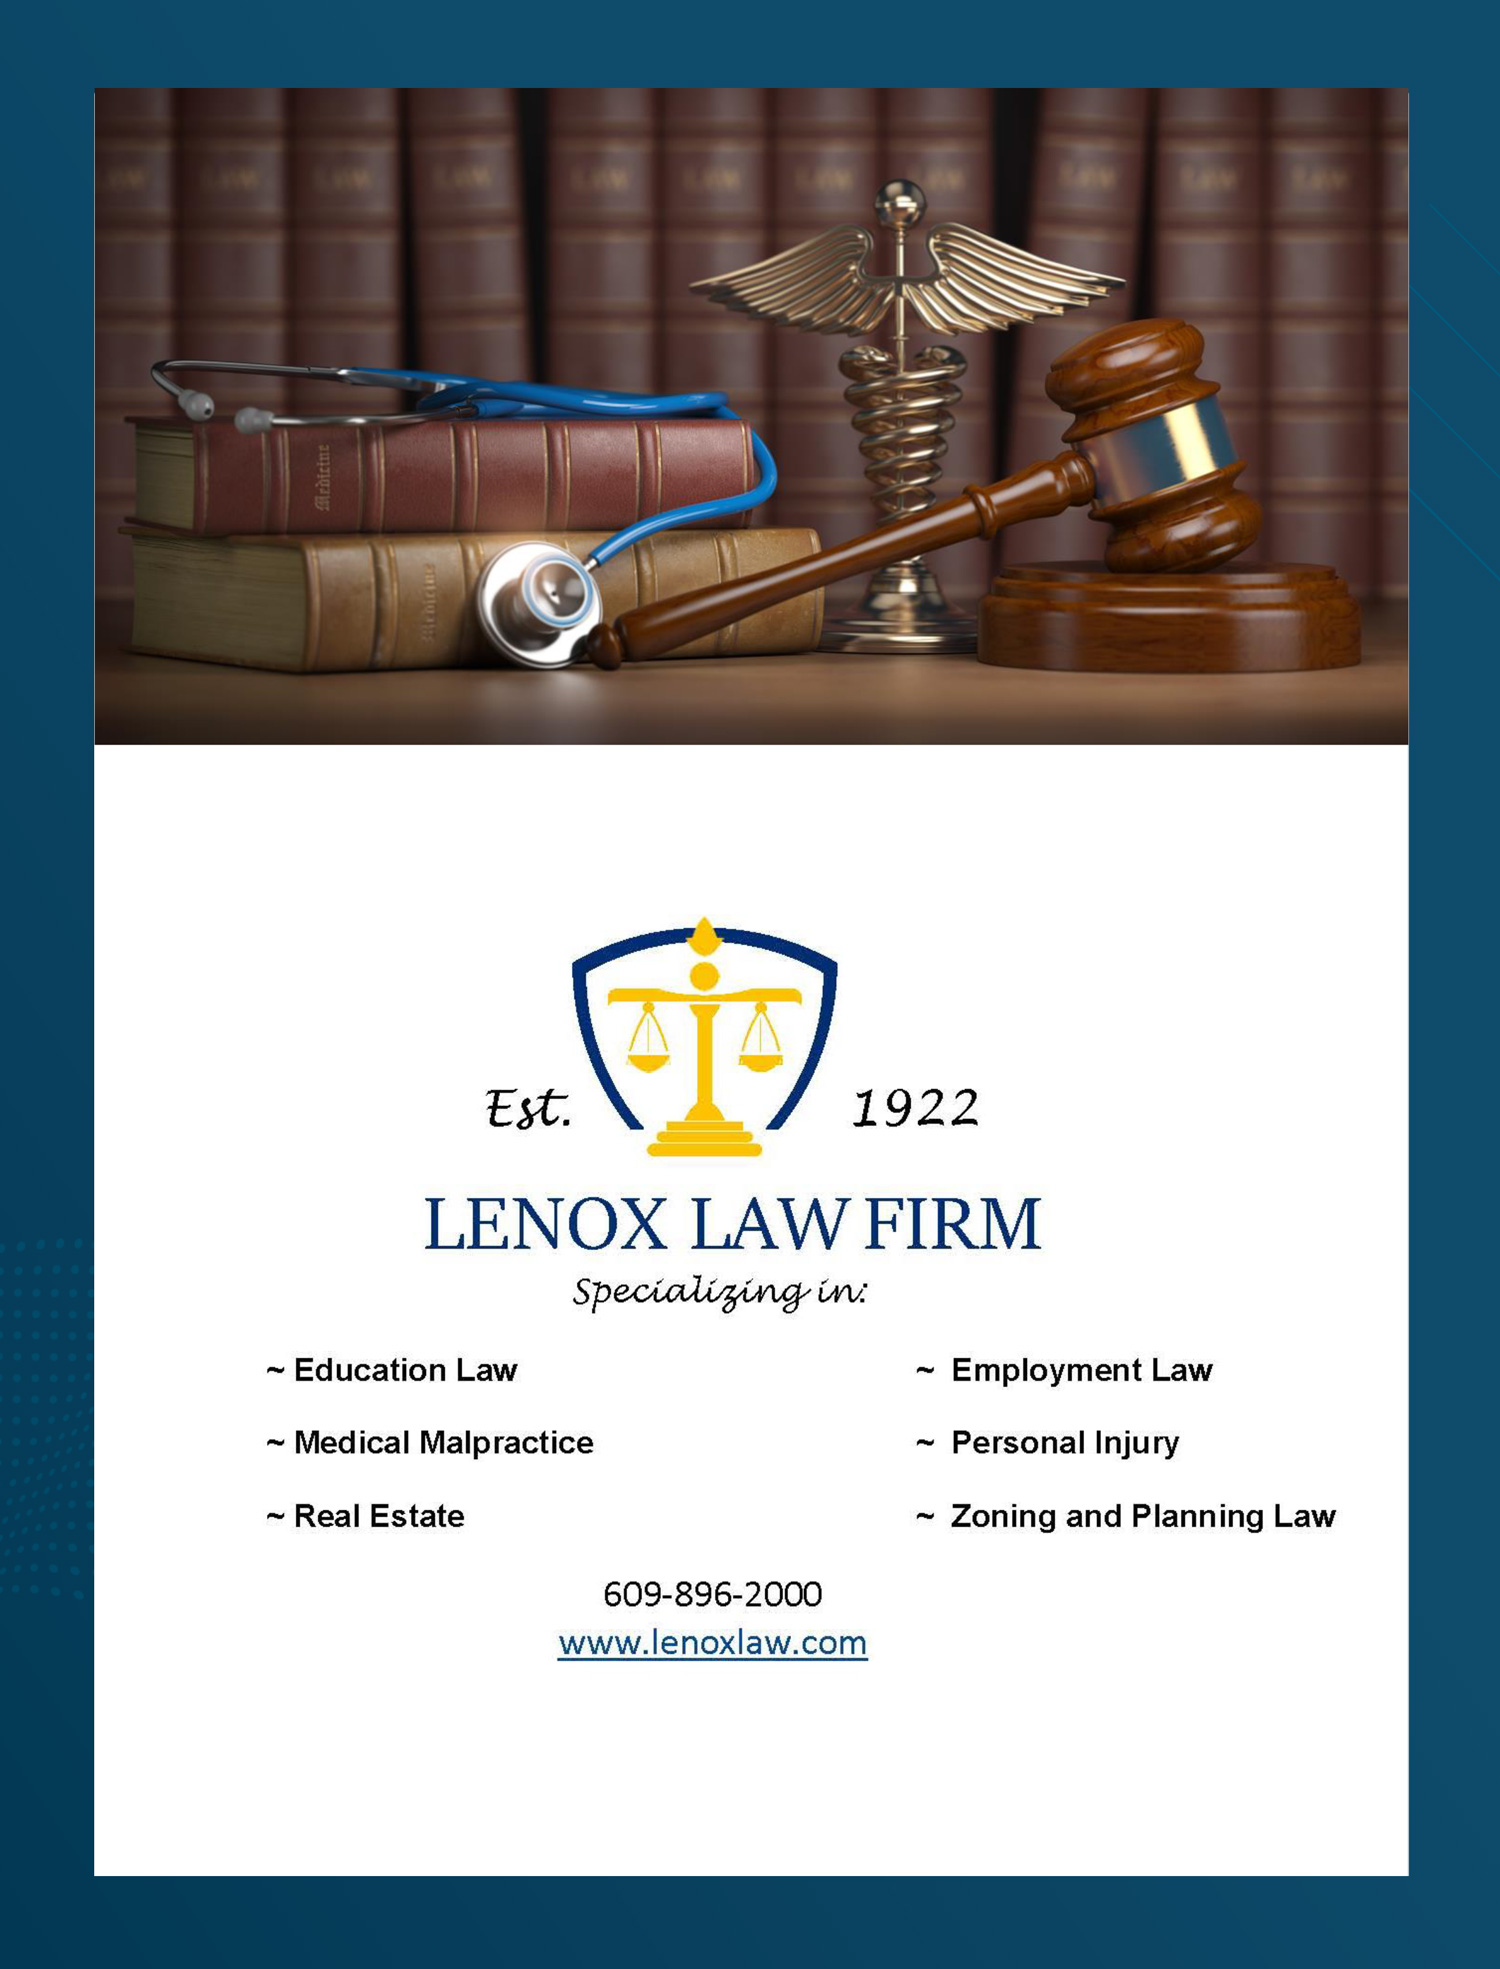 Lenox Law Firm advertisement